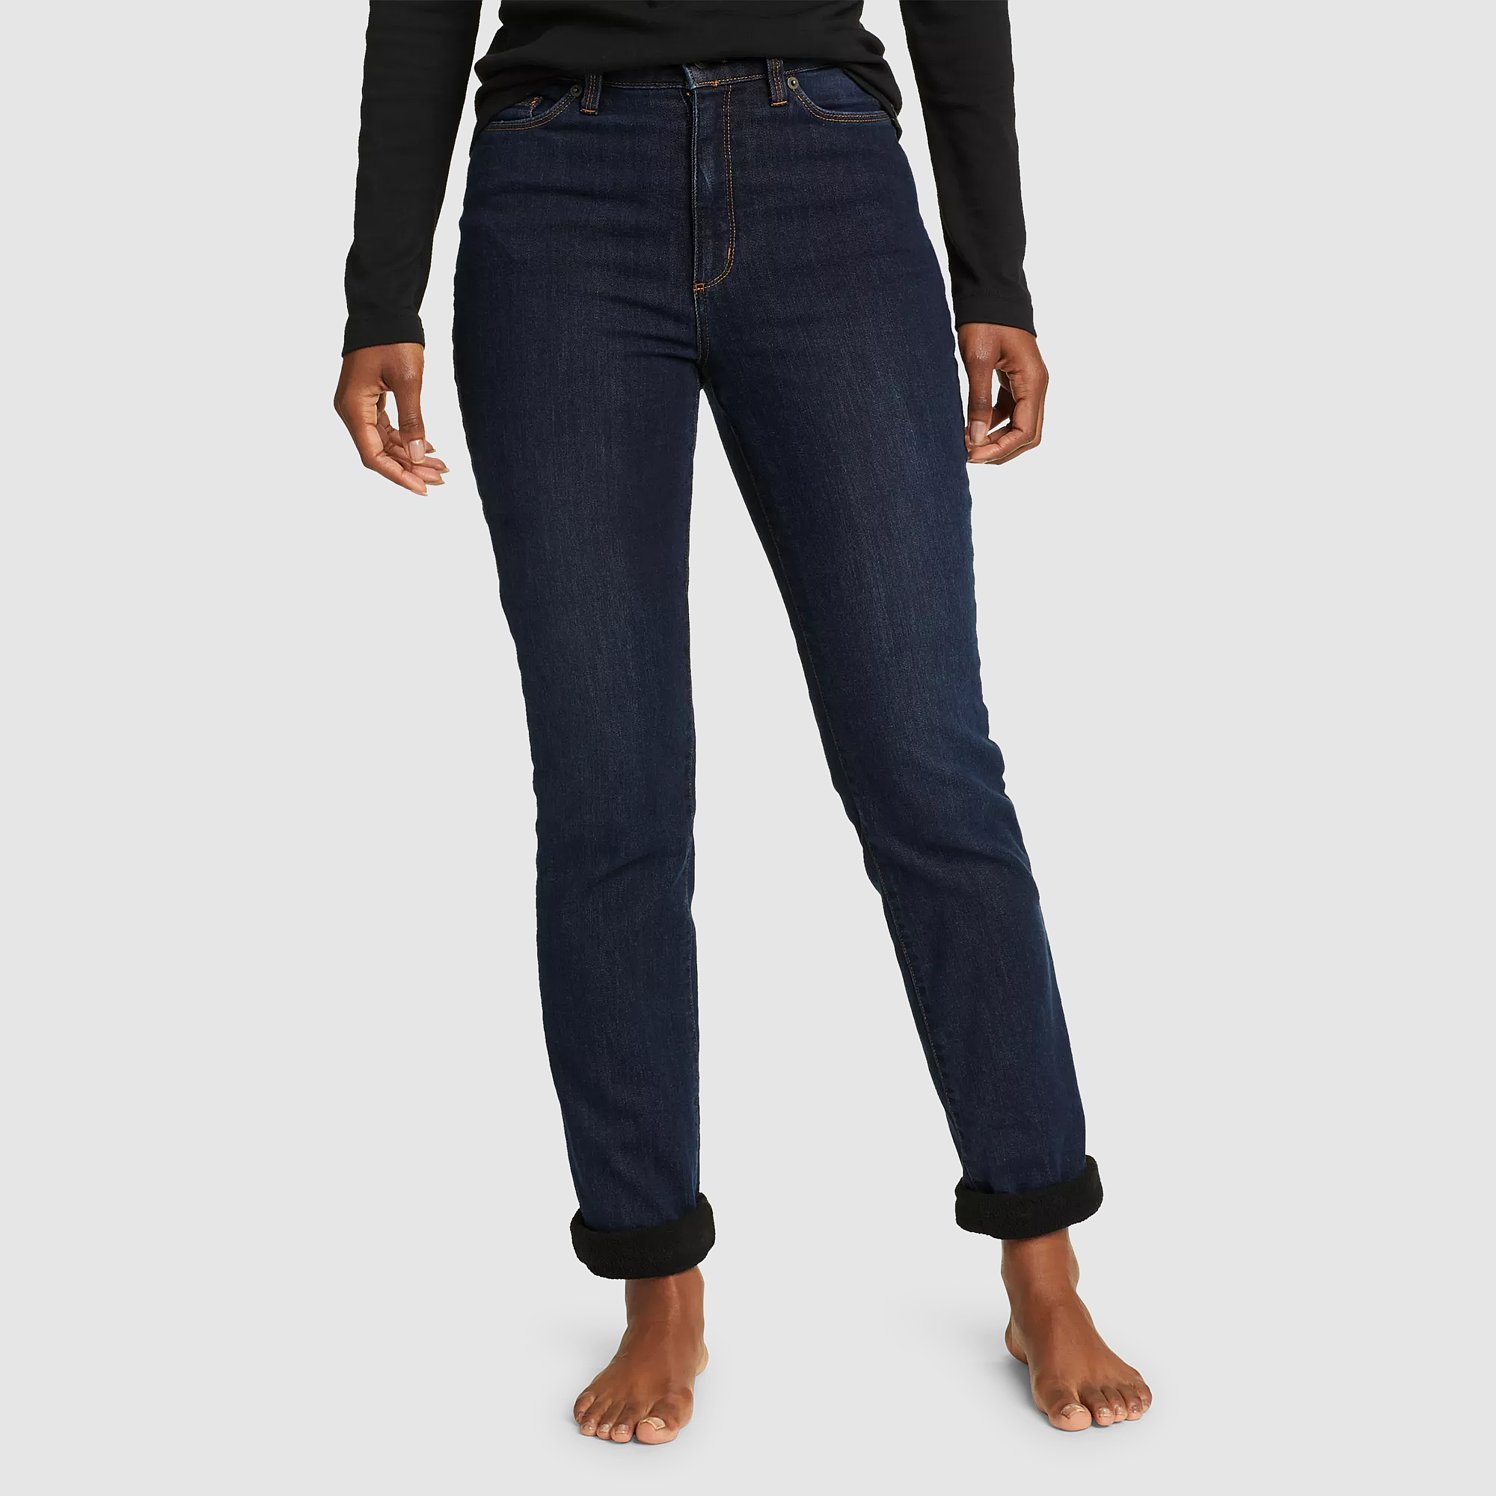 Women's Winter Denim Pants Fleece Lined High Waist Thermal Jean